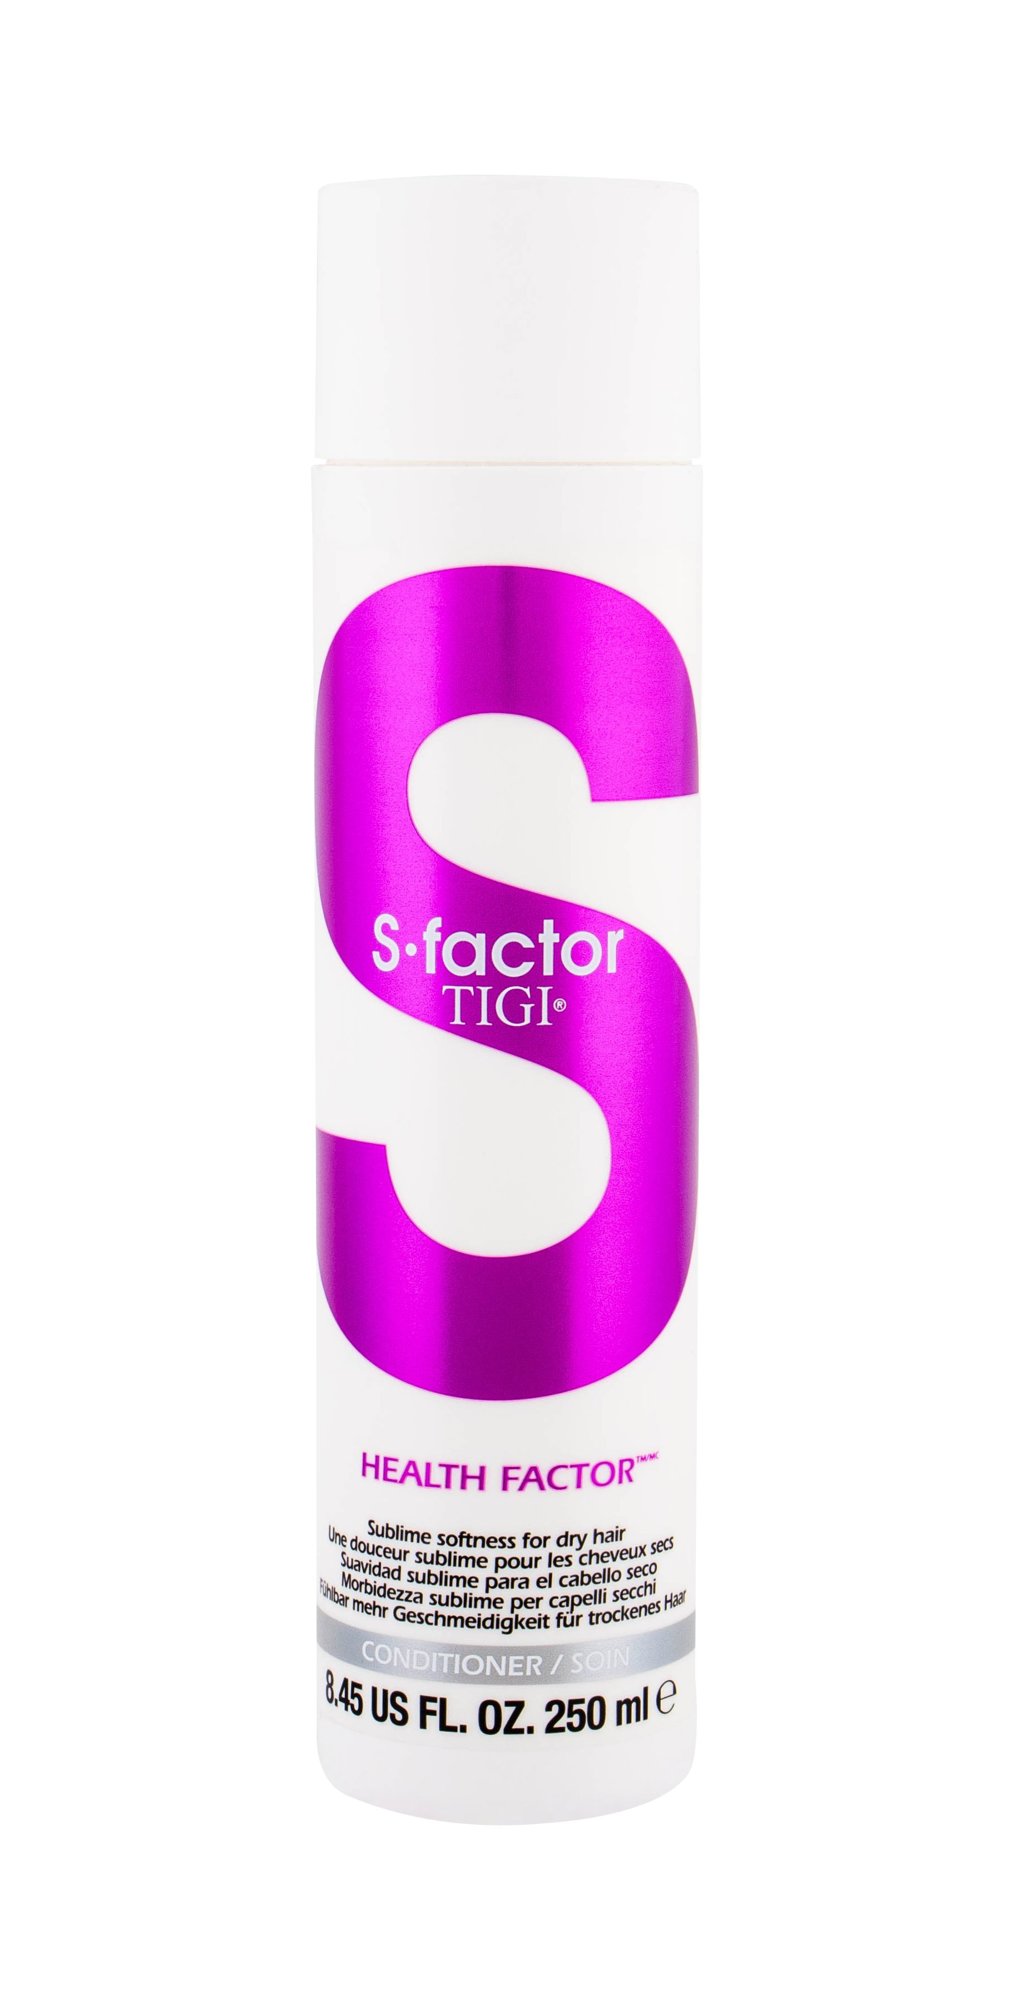 Tigi S Factor Health Factor 250ml kondicionierius